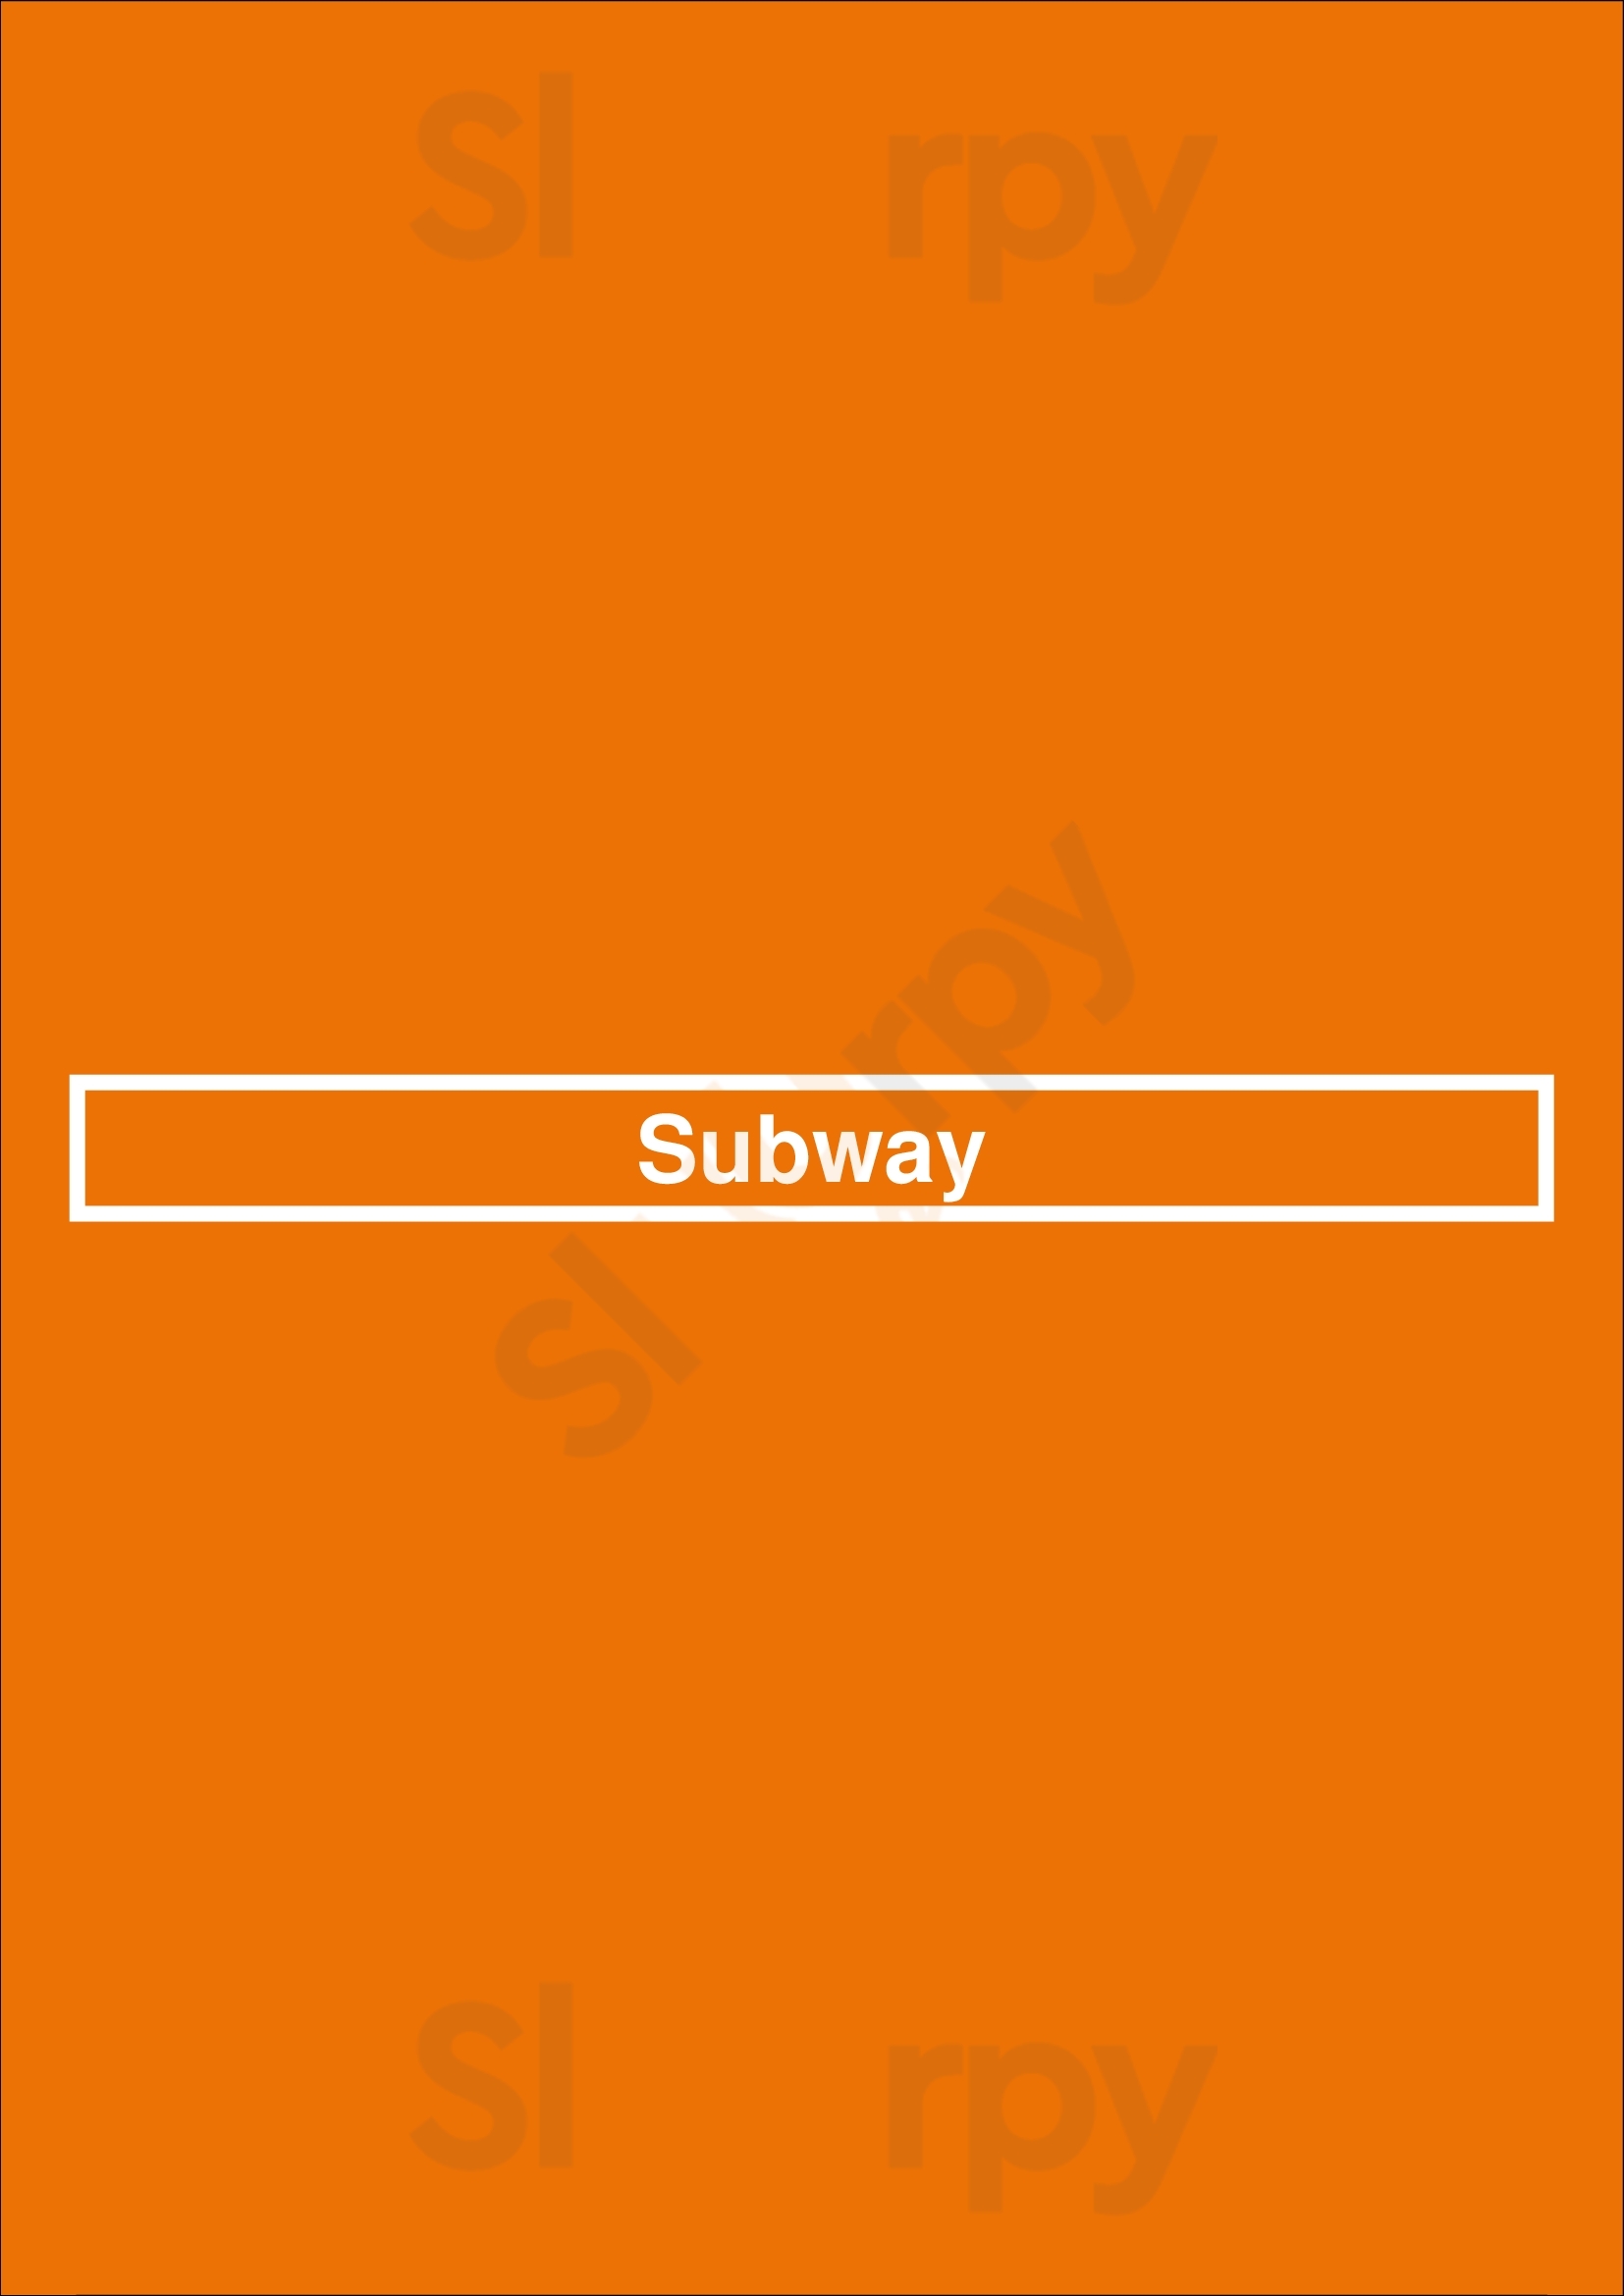 Subway Cambridge Menu - 1